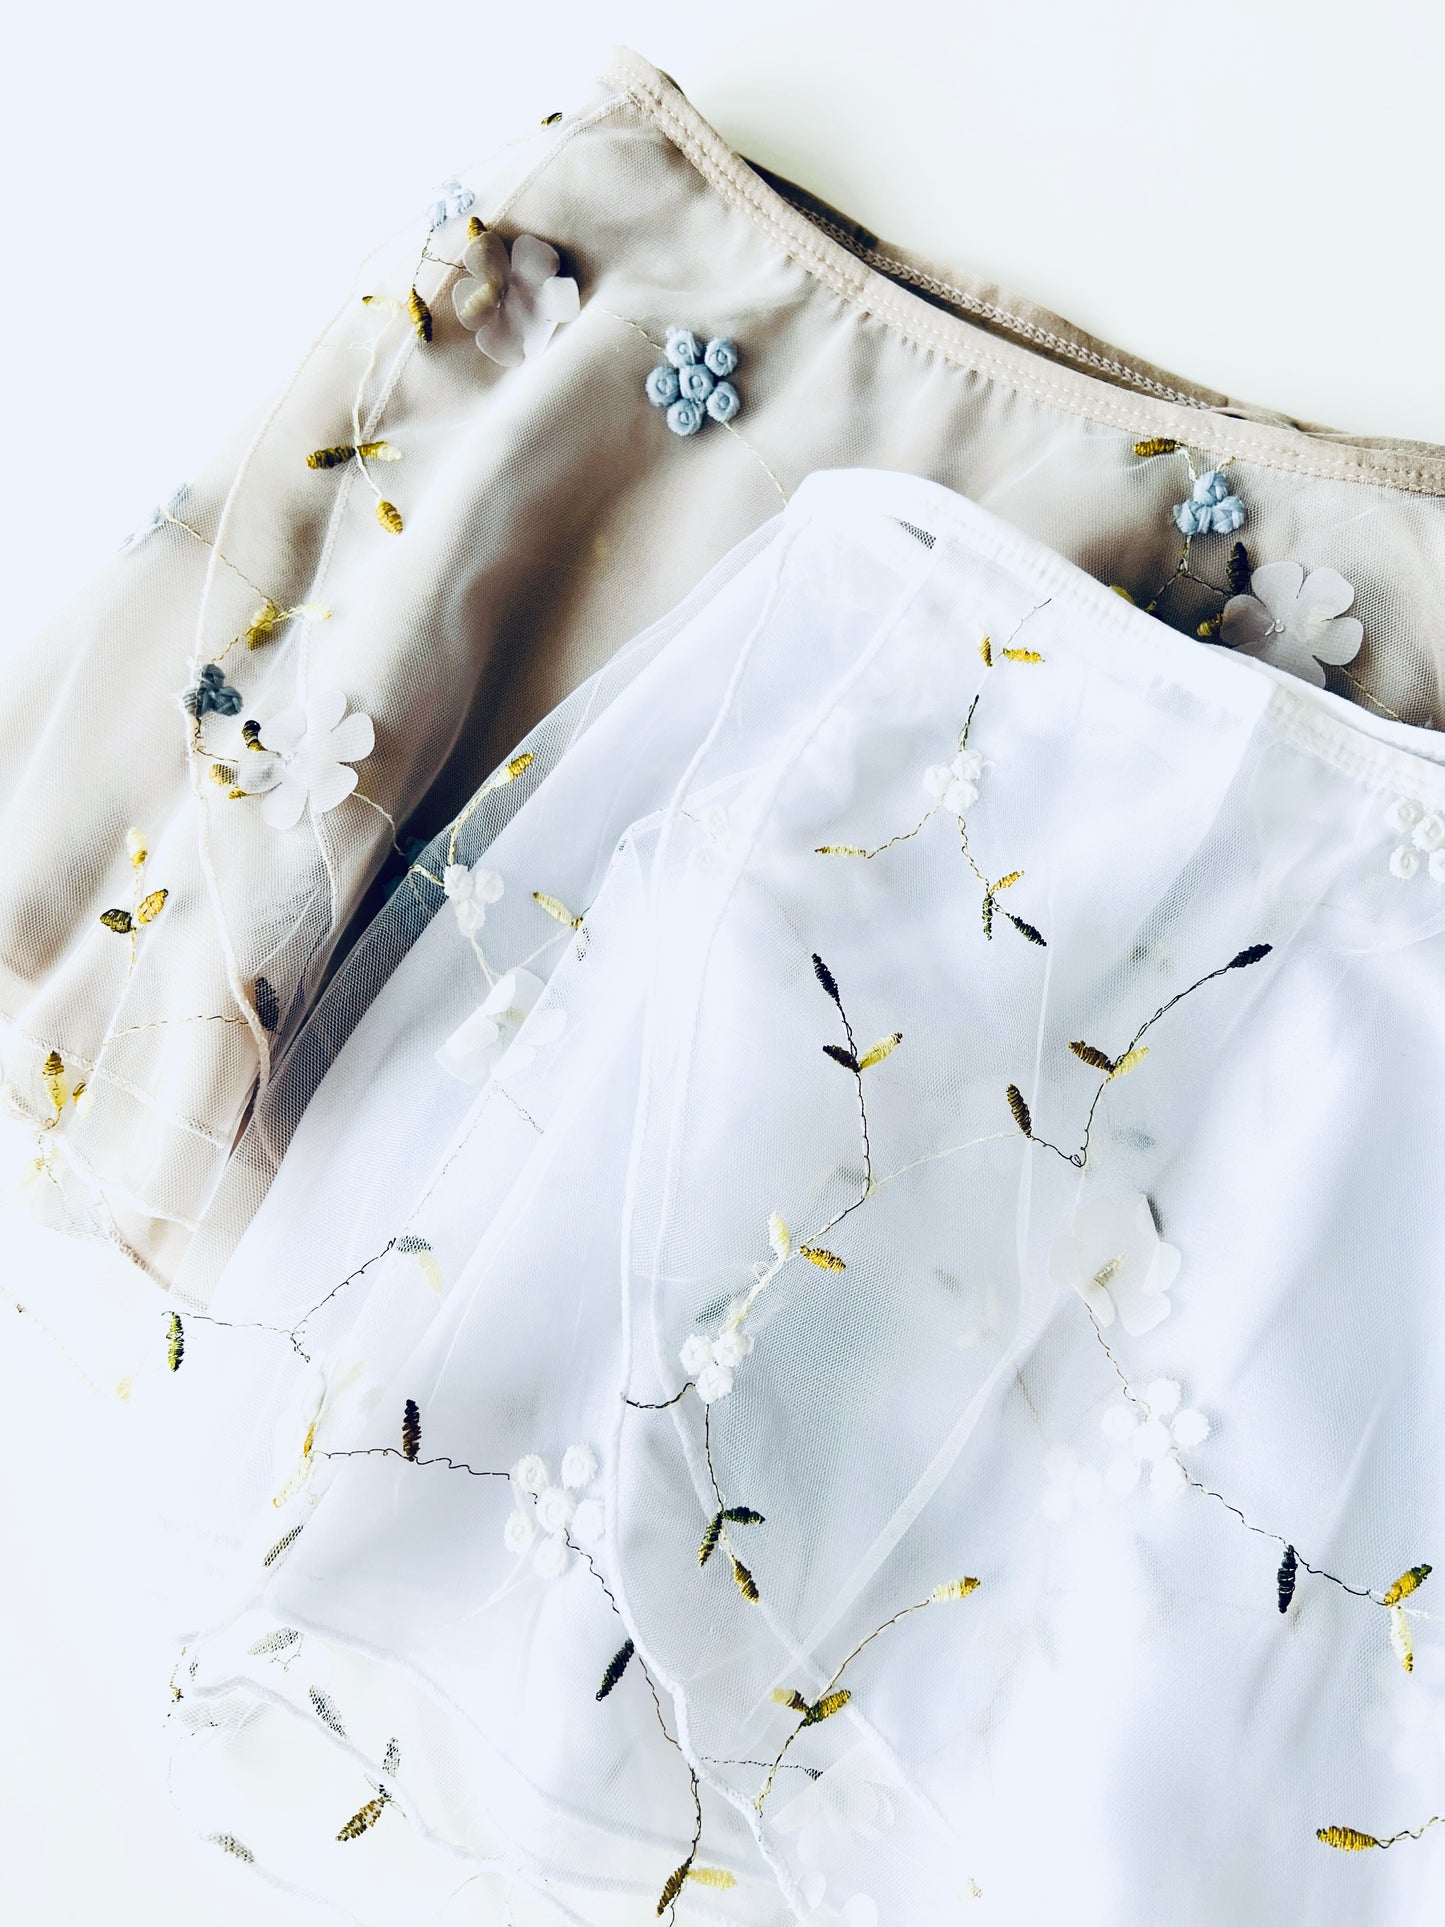 Wrap Short Skirt - Embroidered Petals -Mink